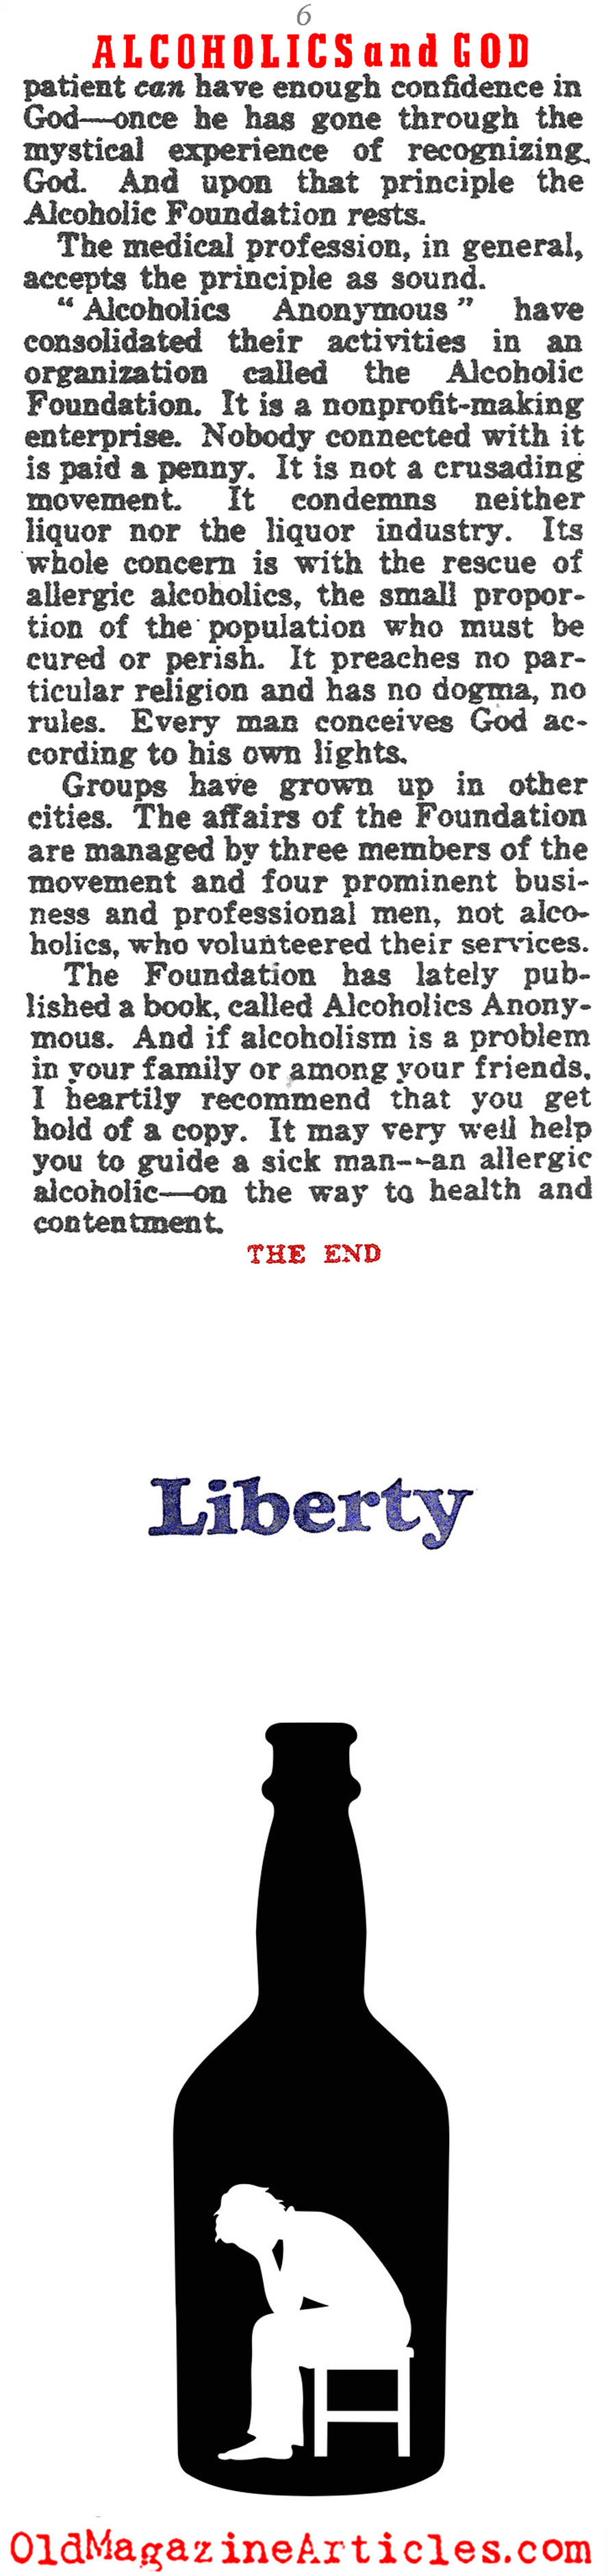 ''God and Alcoholics'' (Liberty Magazine, 1939)